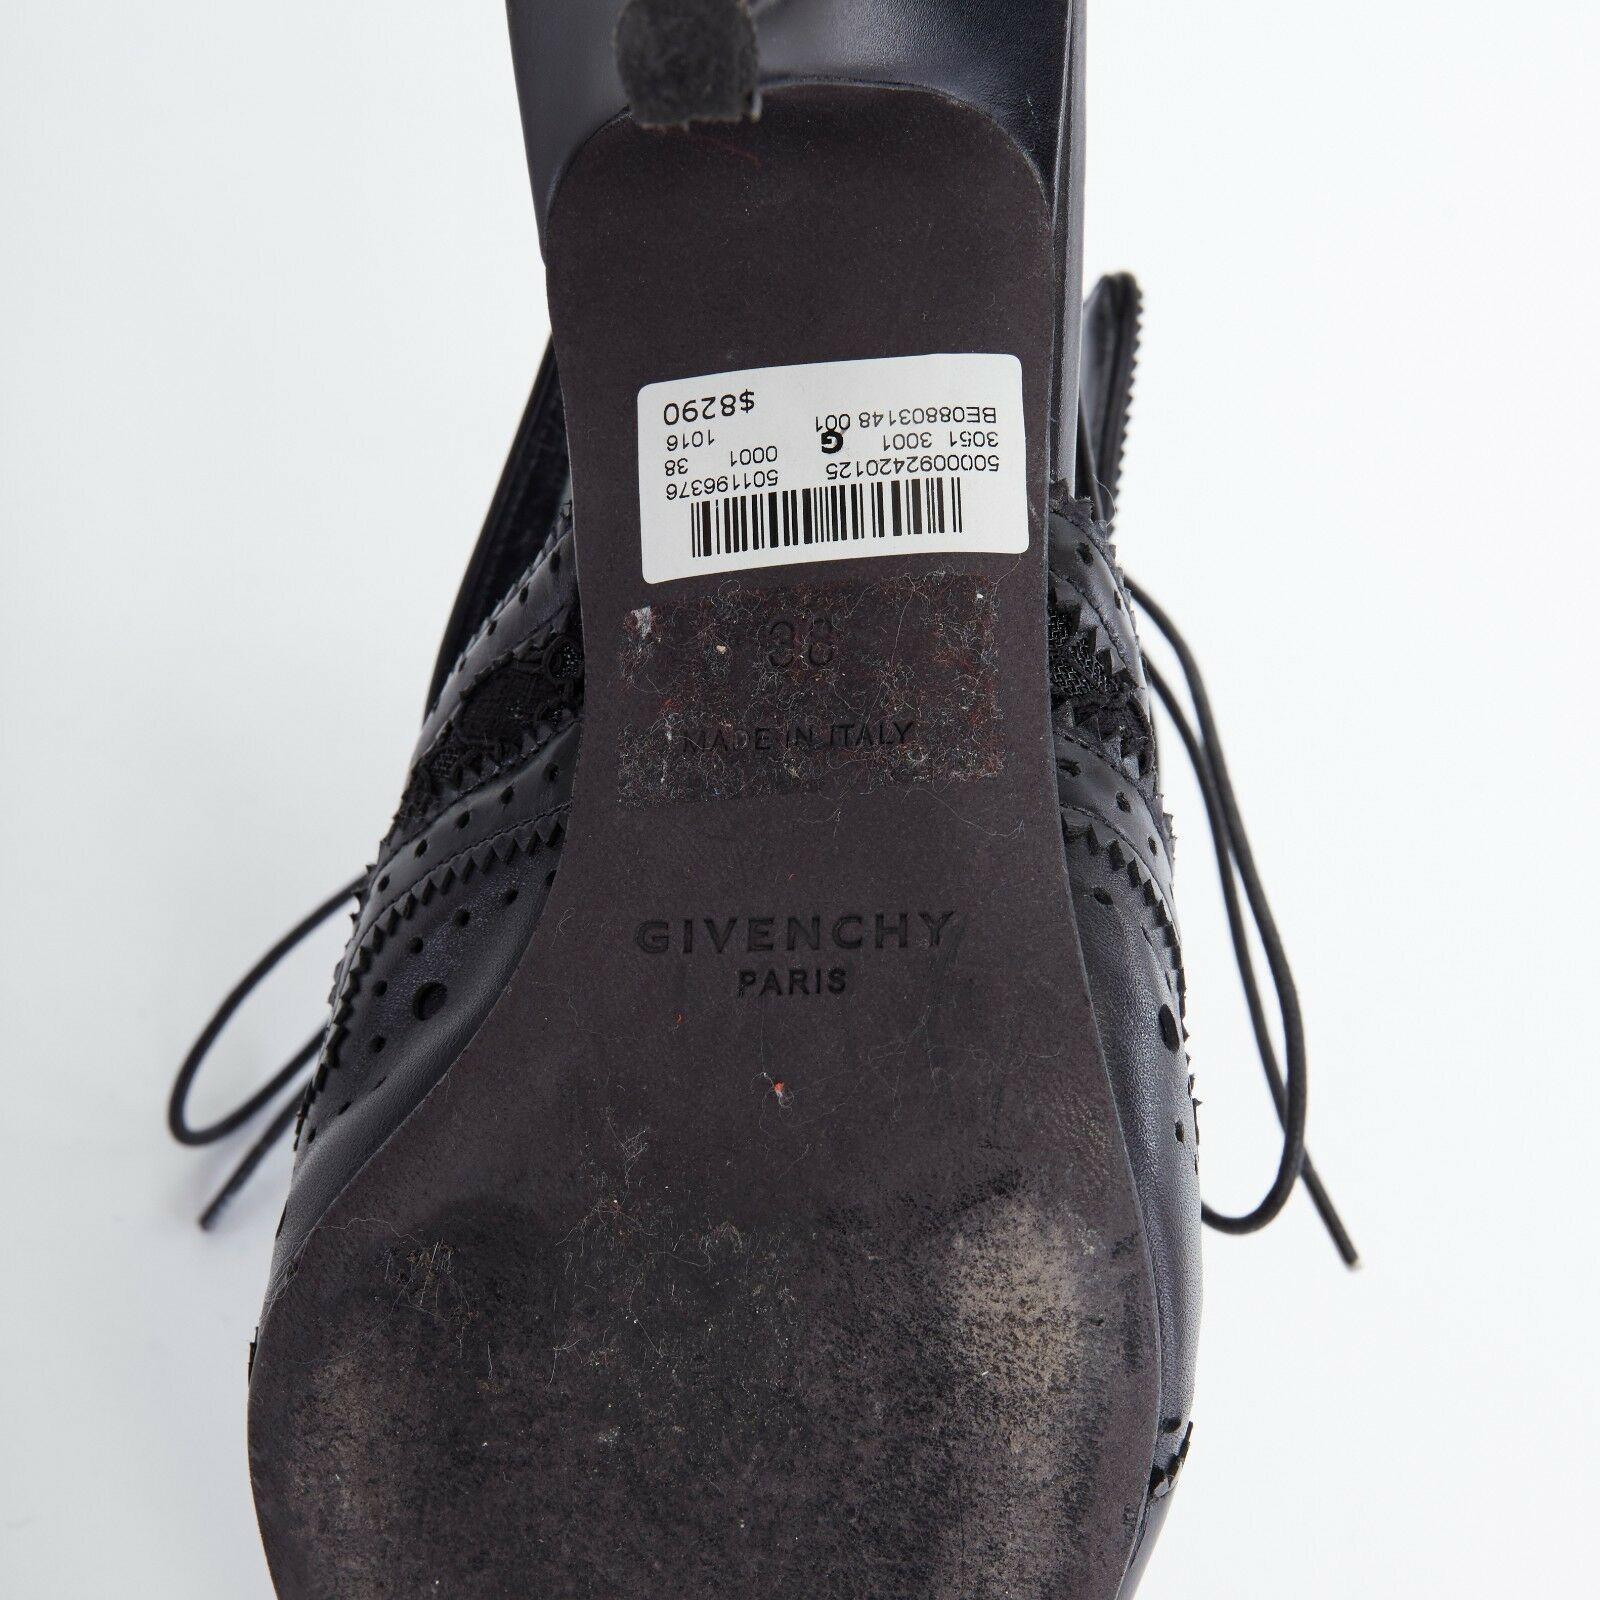 runway GIVENCHY TISCI black lace brogue pointy sling back kitten heel shoes EU38 3